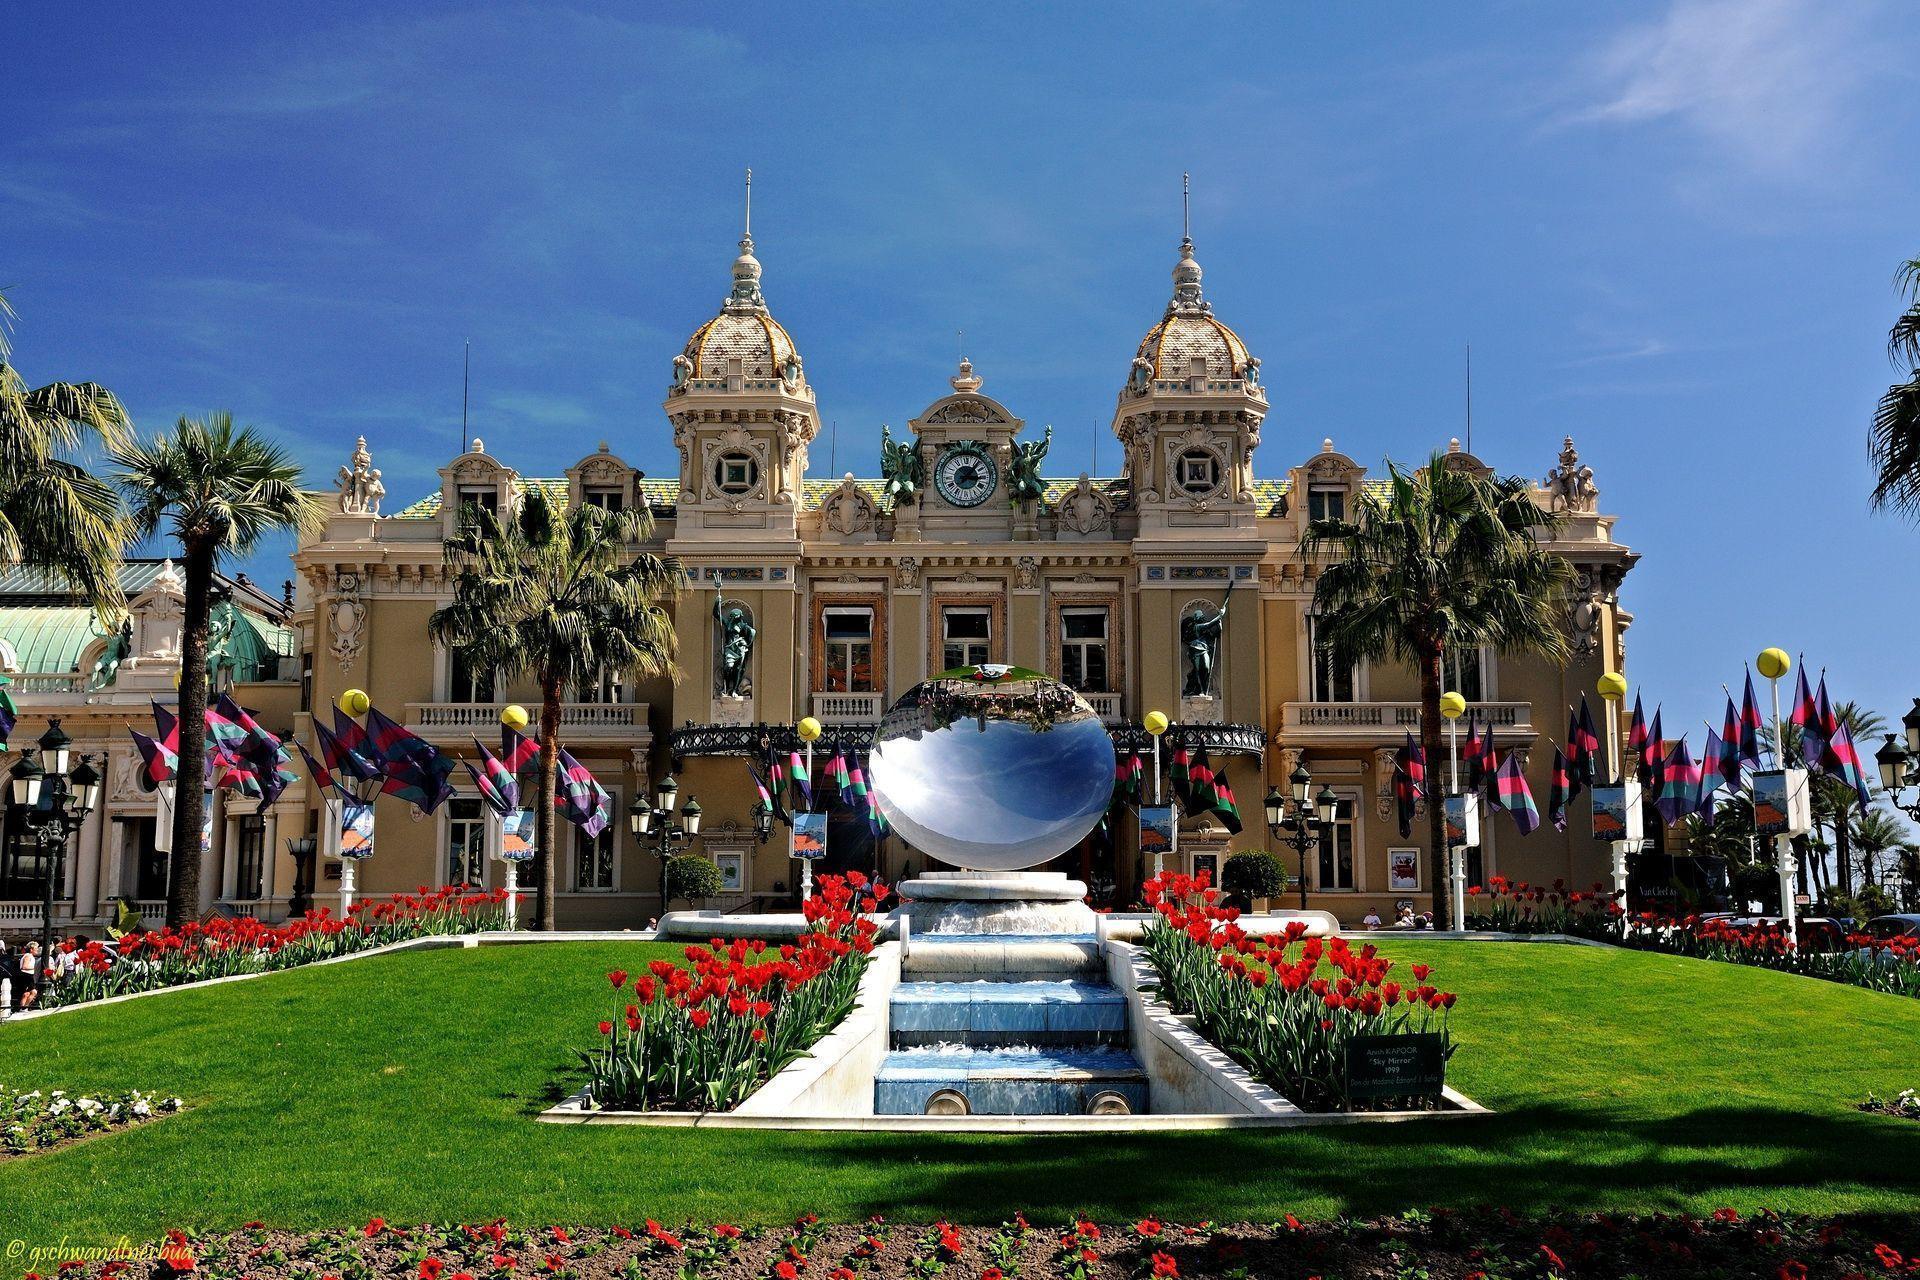 Monte Carlo Wallpaper Image Photo Picture Background